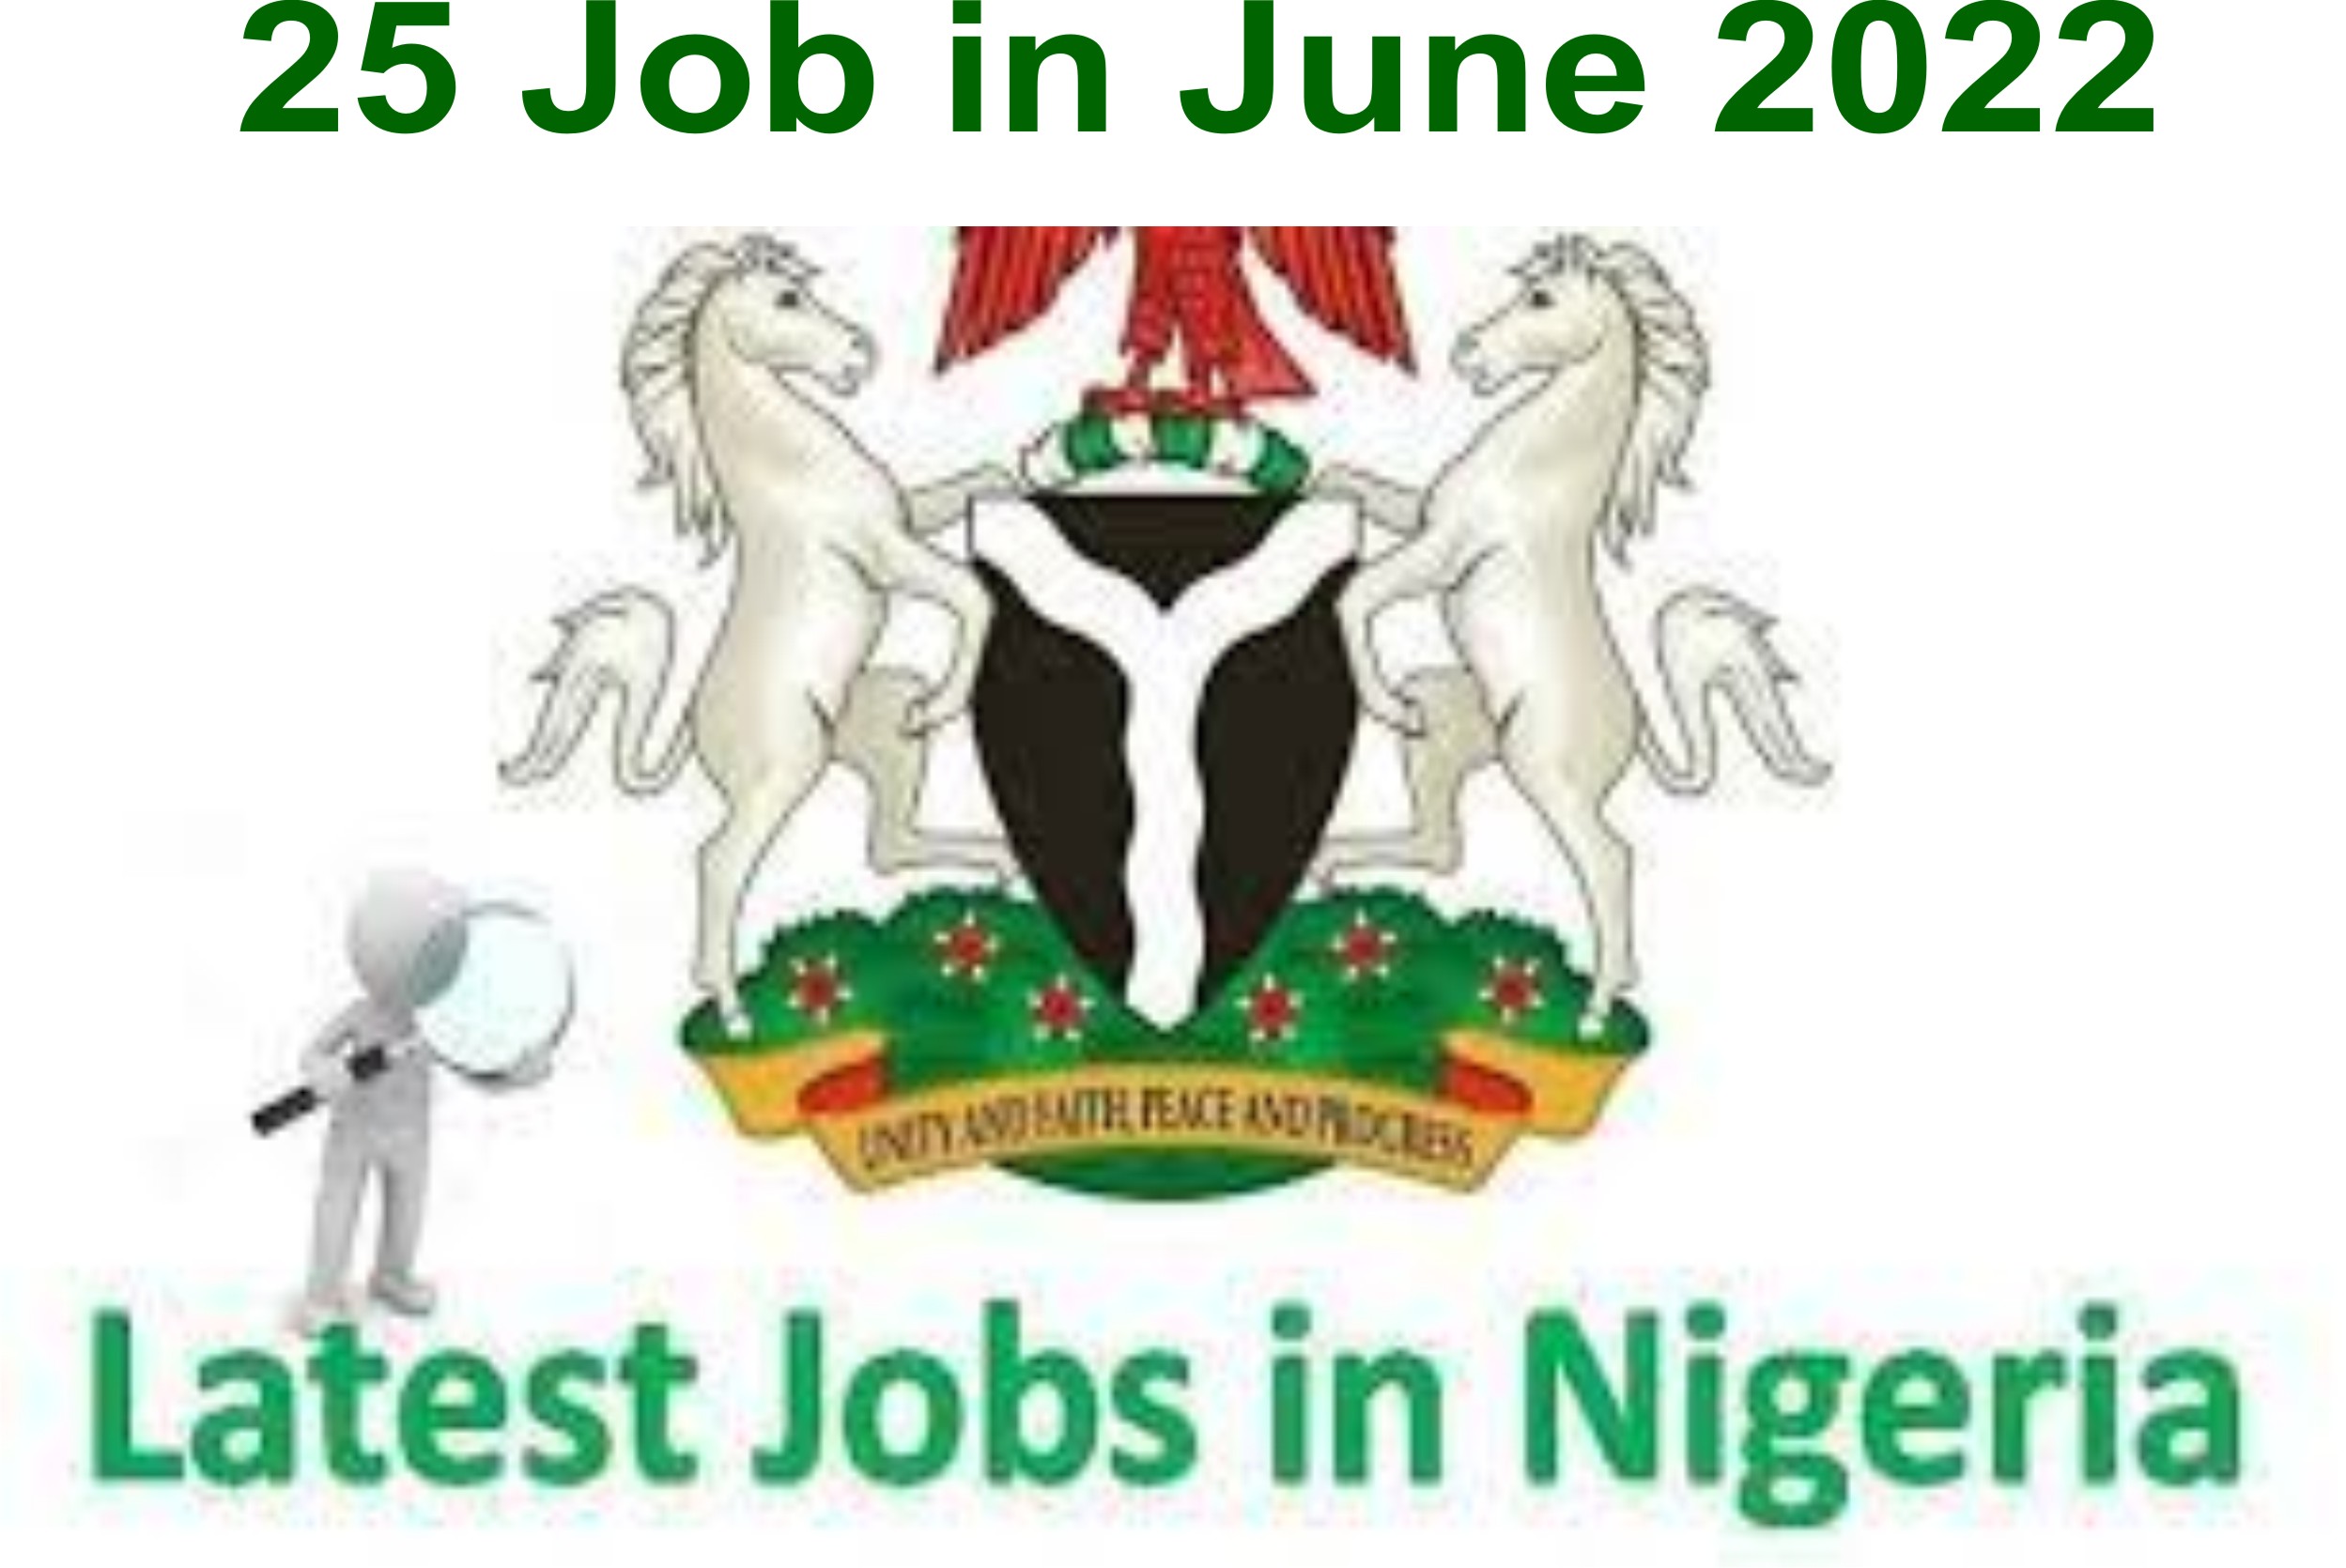 25 job opportunity in nigeria